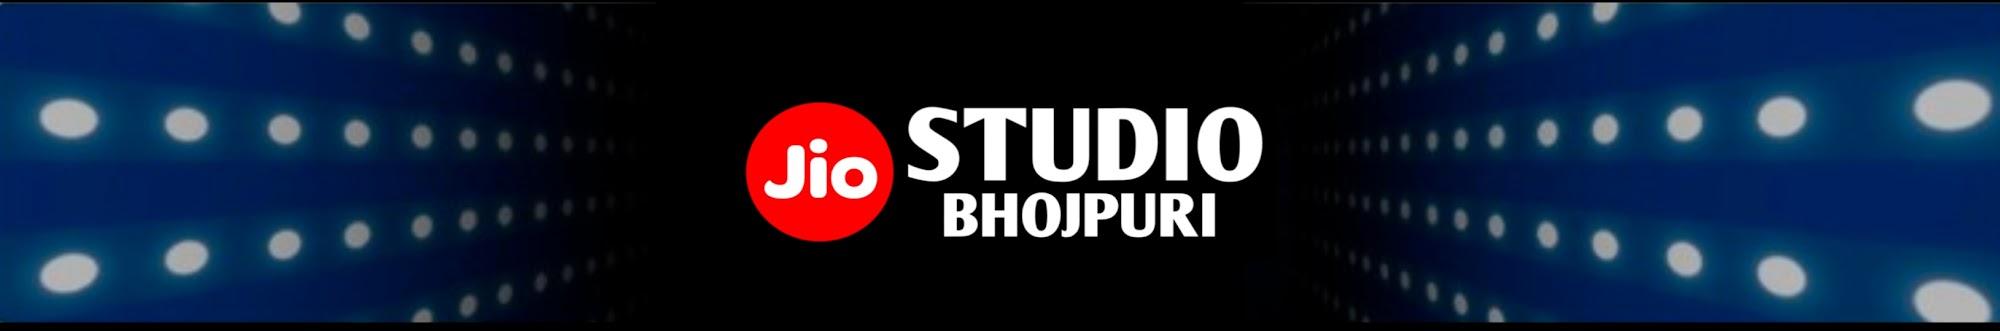 Jio Studio Bhojpuri